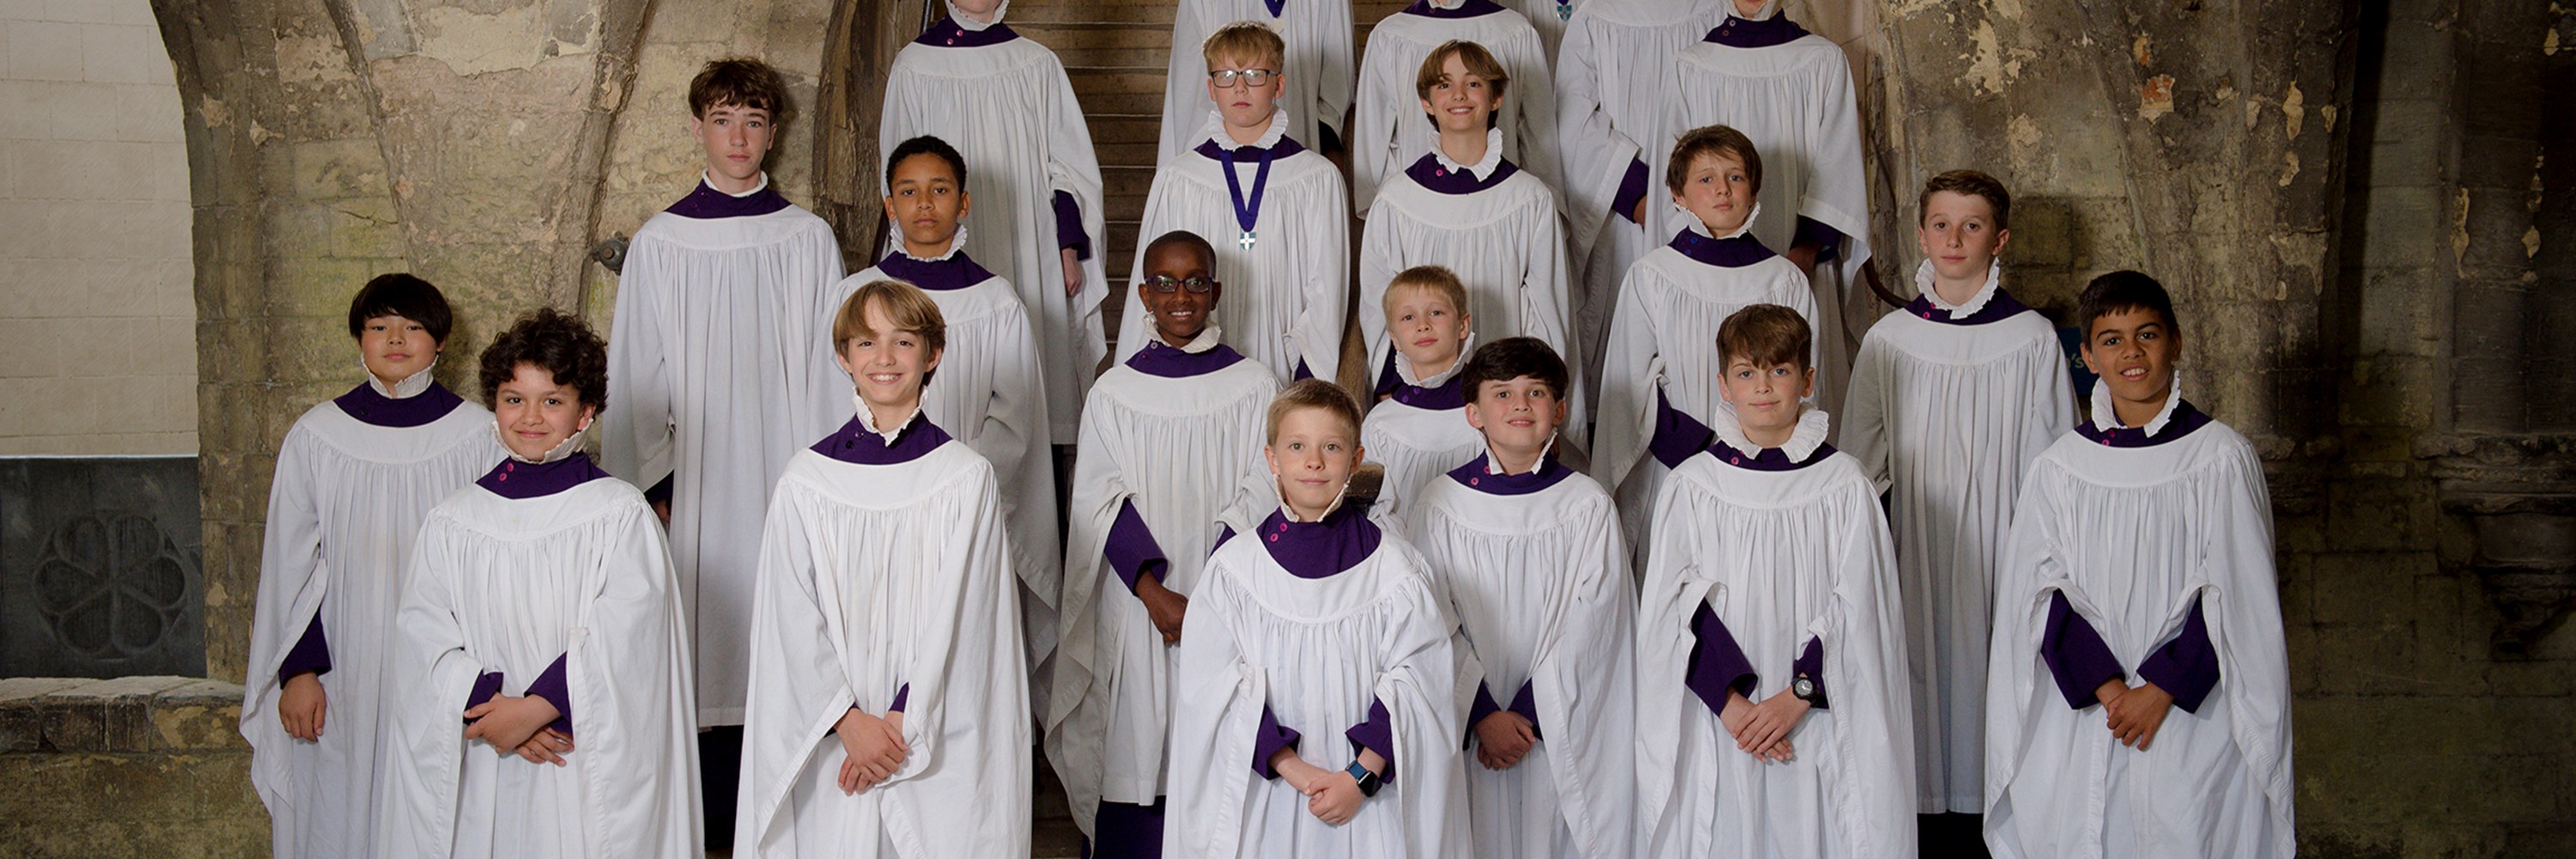 Canterbury Cathedral Boys Choir1